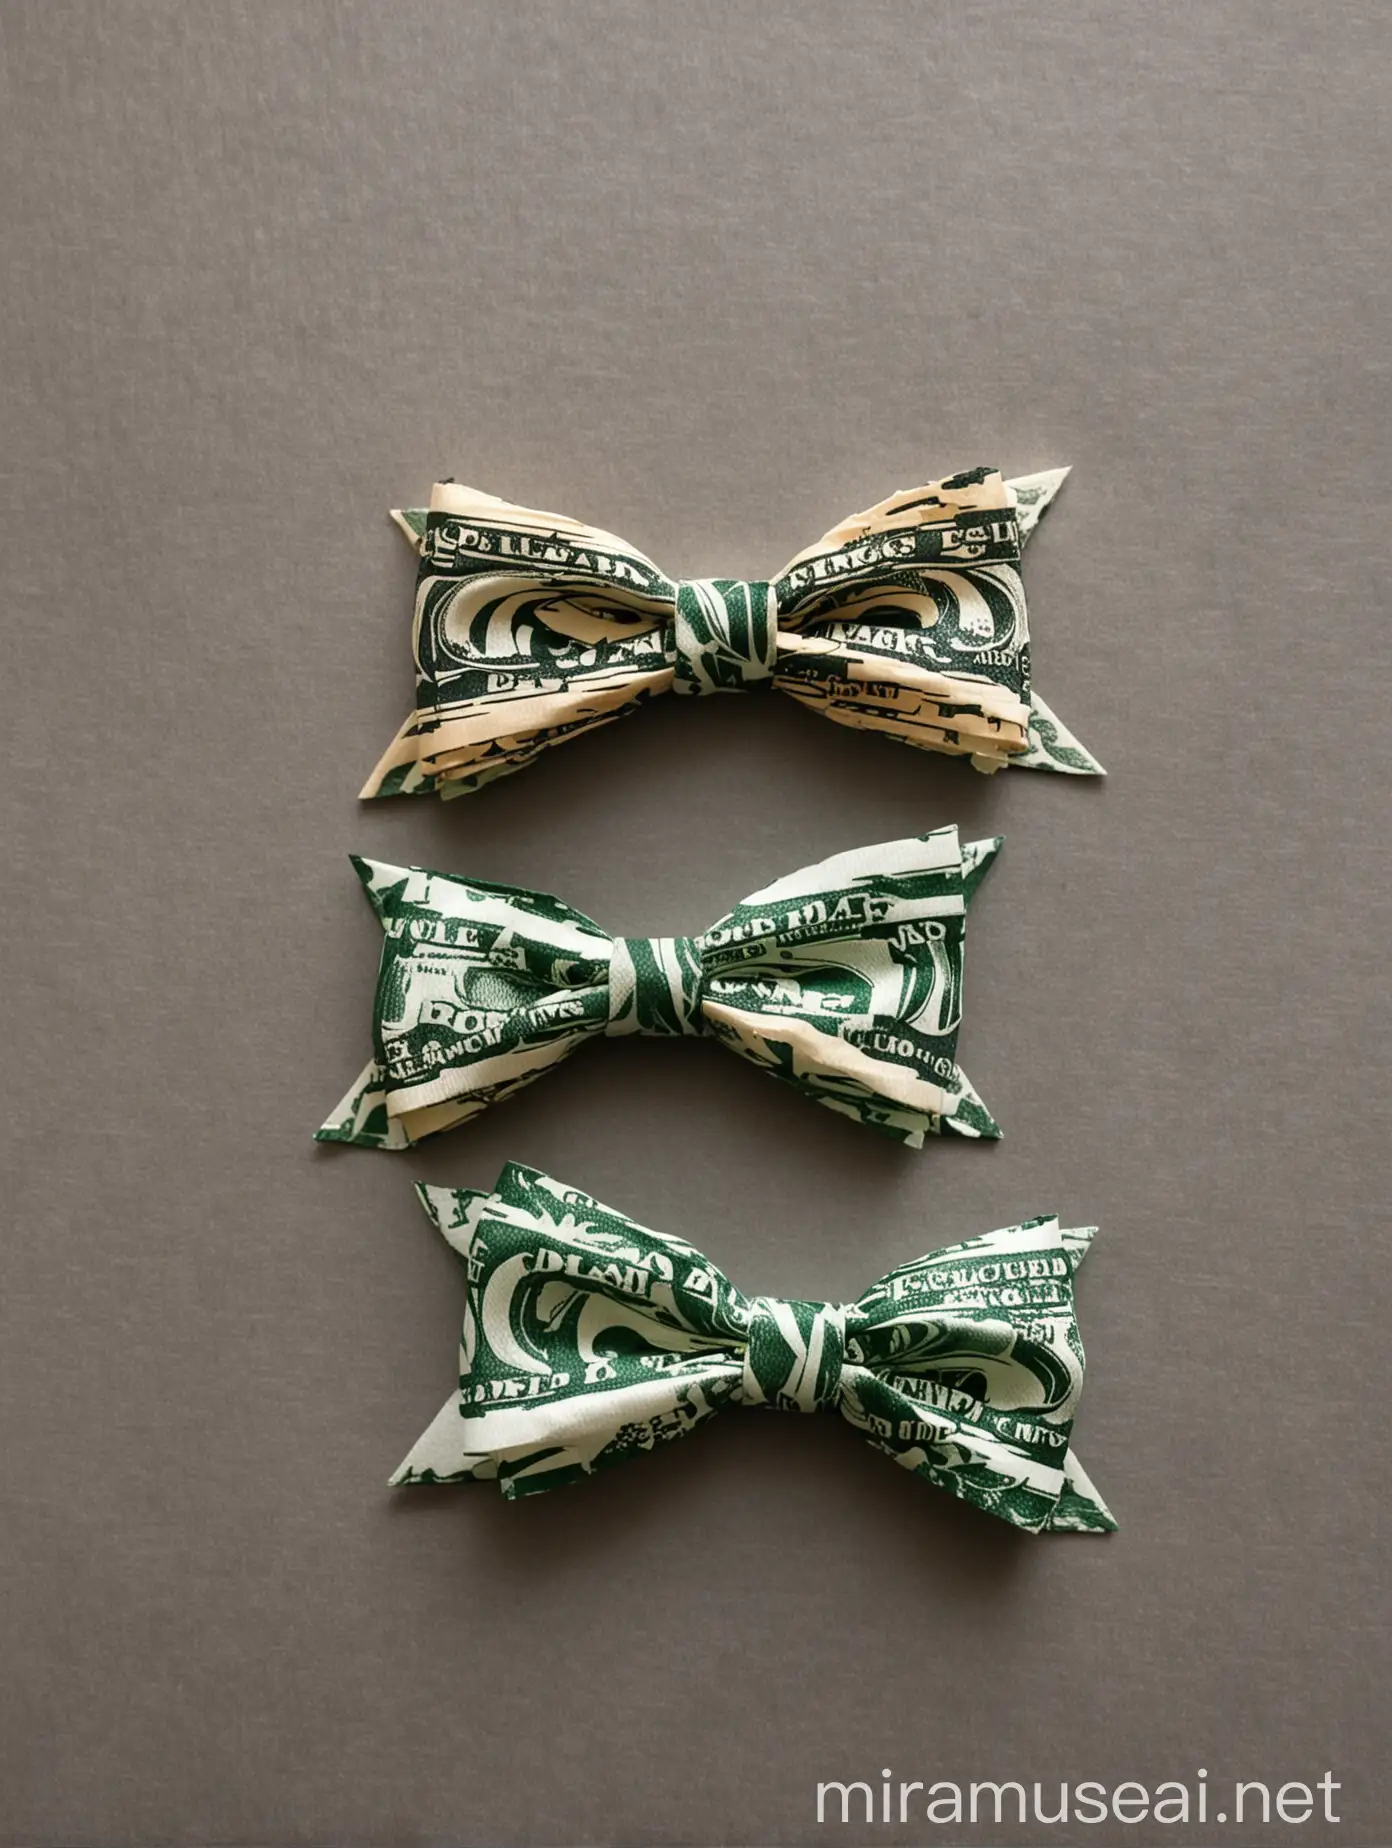 Dollar bows